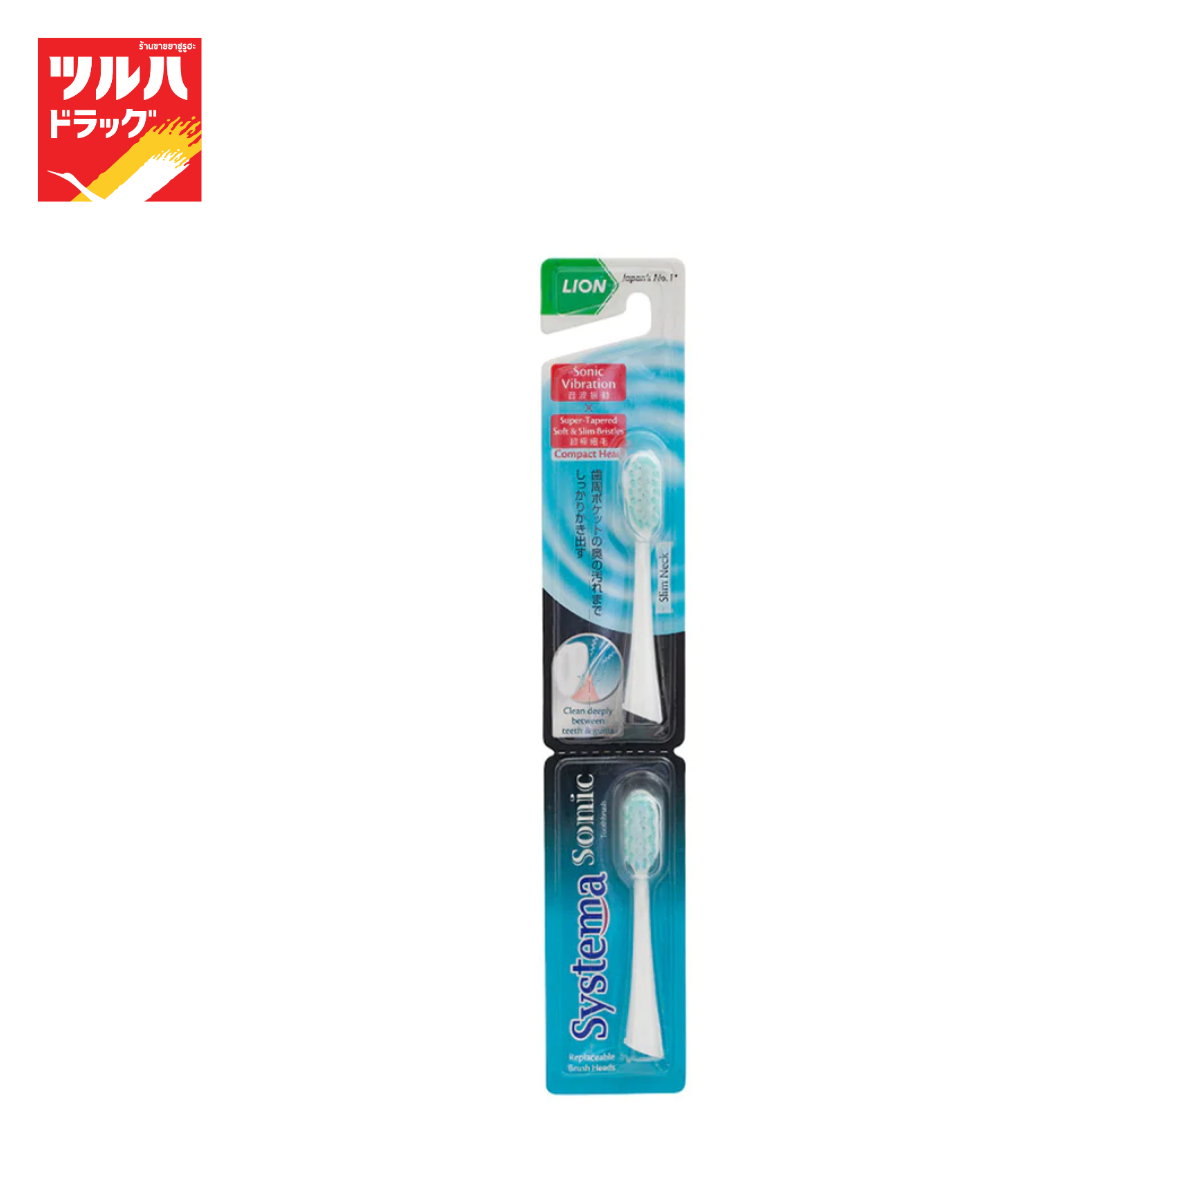 Systema Sonic Electric Toothbrush Head Refill / หัวแปรงสีฟันไฟฟ้า ซิสเท็มมา โซนิค รีฟิล